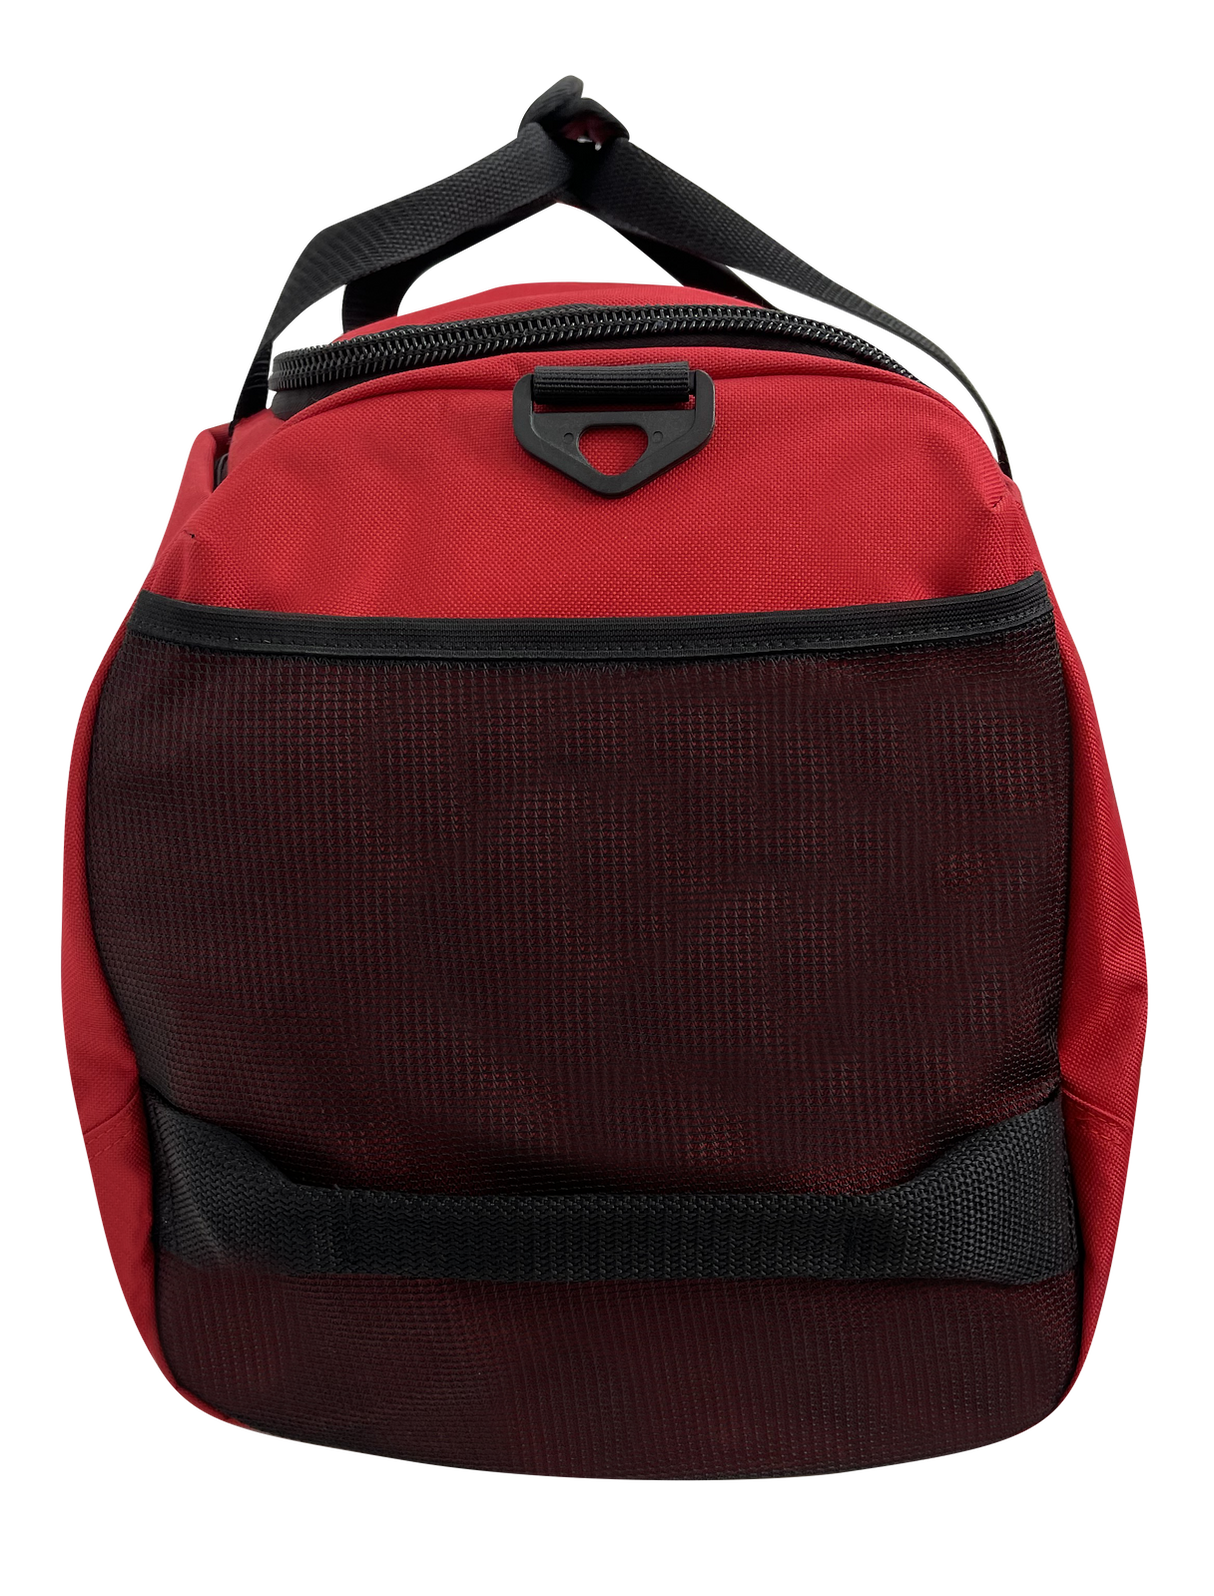 38L FIB Sports Duffle Bag Duffel Gym Canvas Travel Foldable - Red